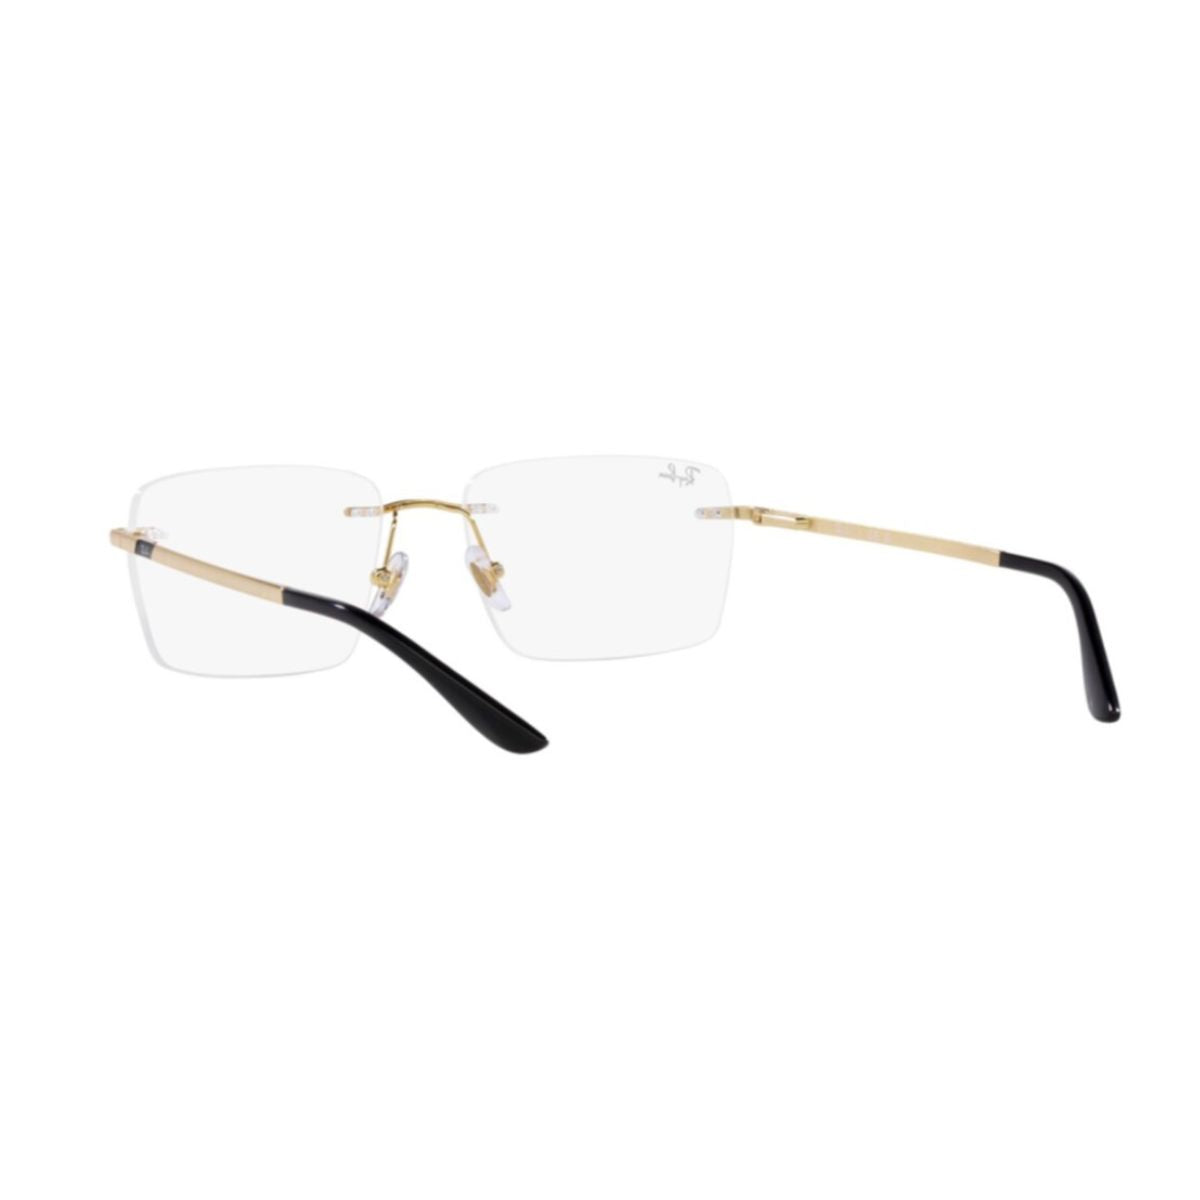 "Rayban 6506I 2500 eye glasses frame for men and women at optorium"